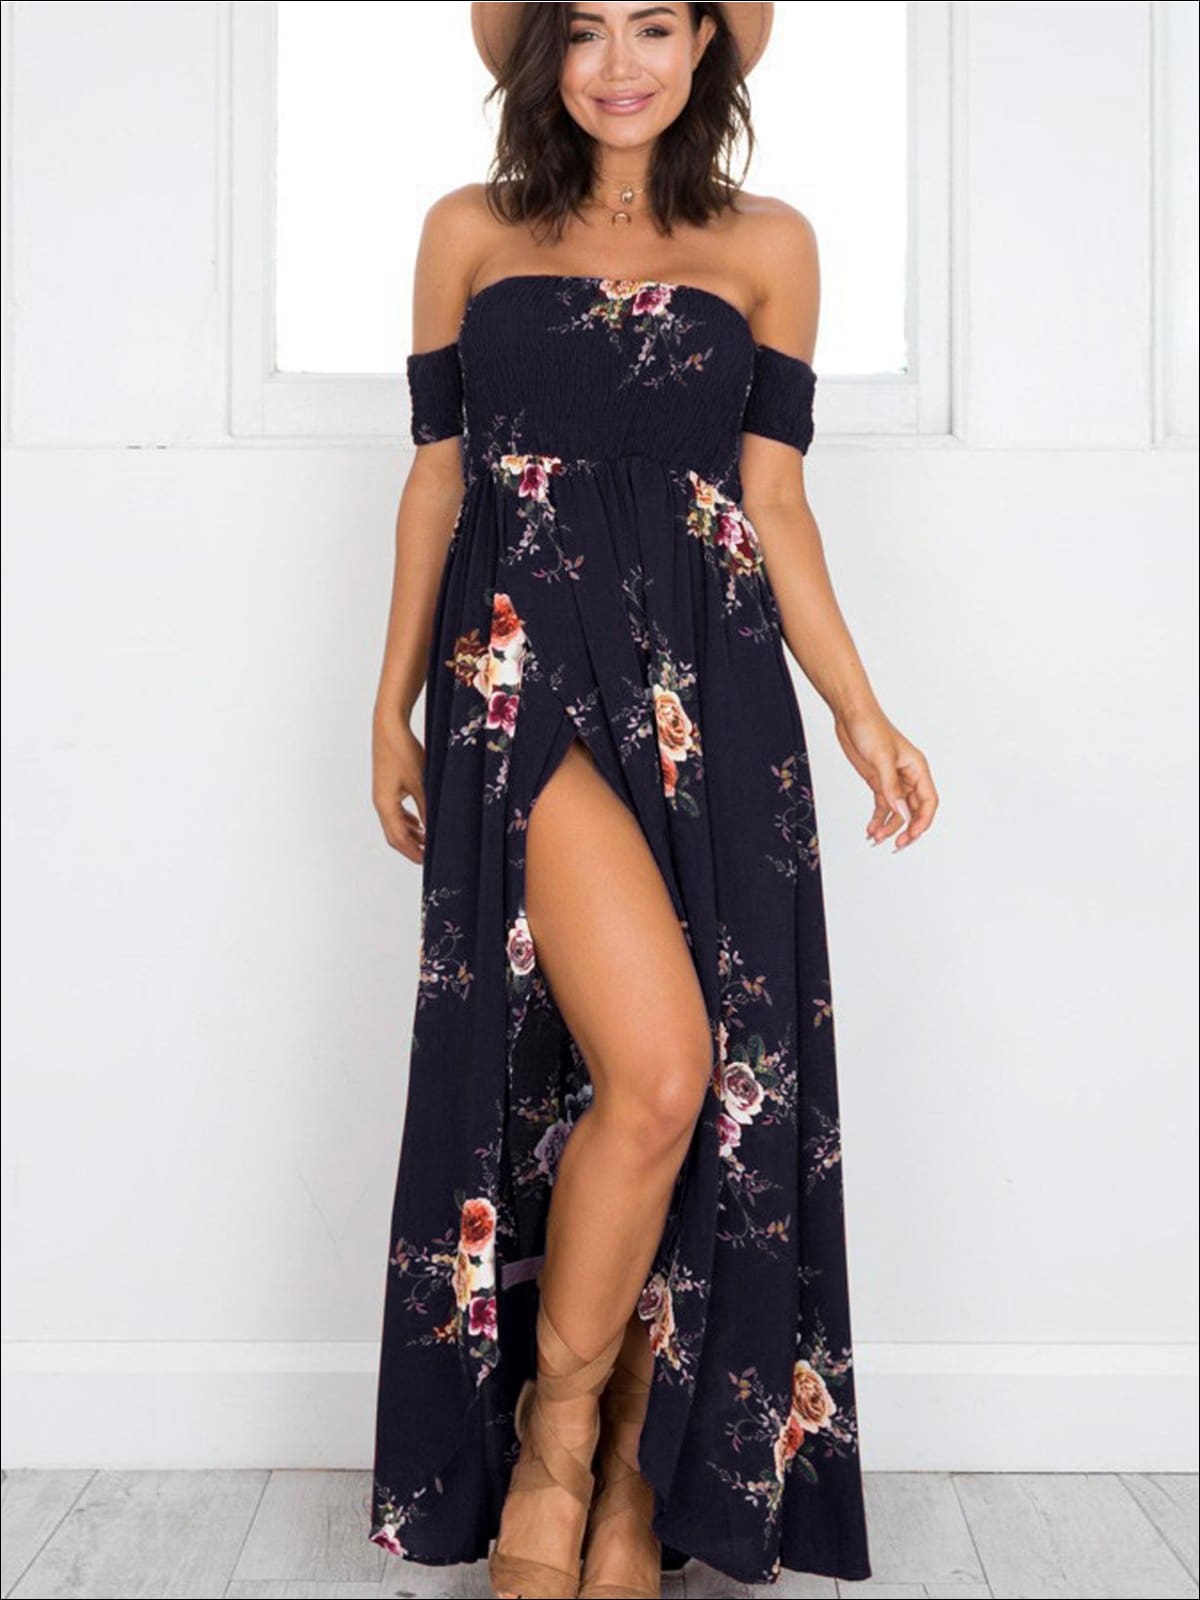 Black Summer Dresses, Black Floral & Beach Sundresses